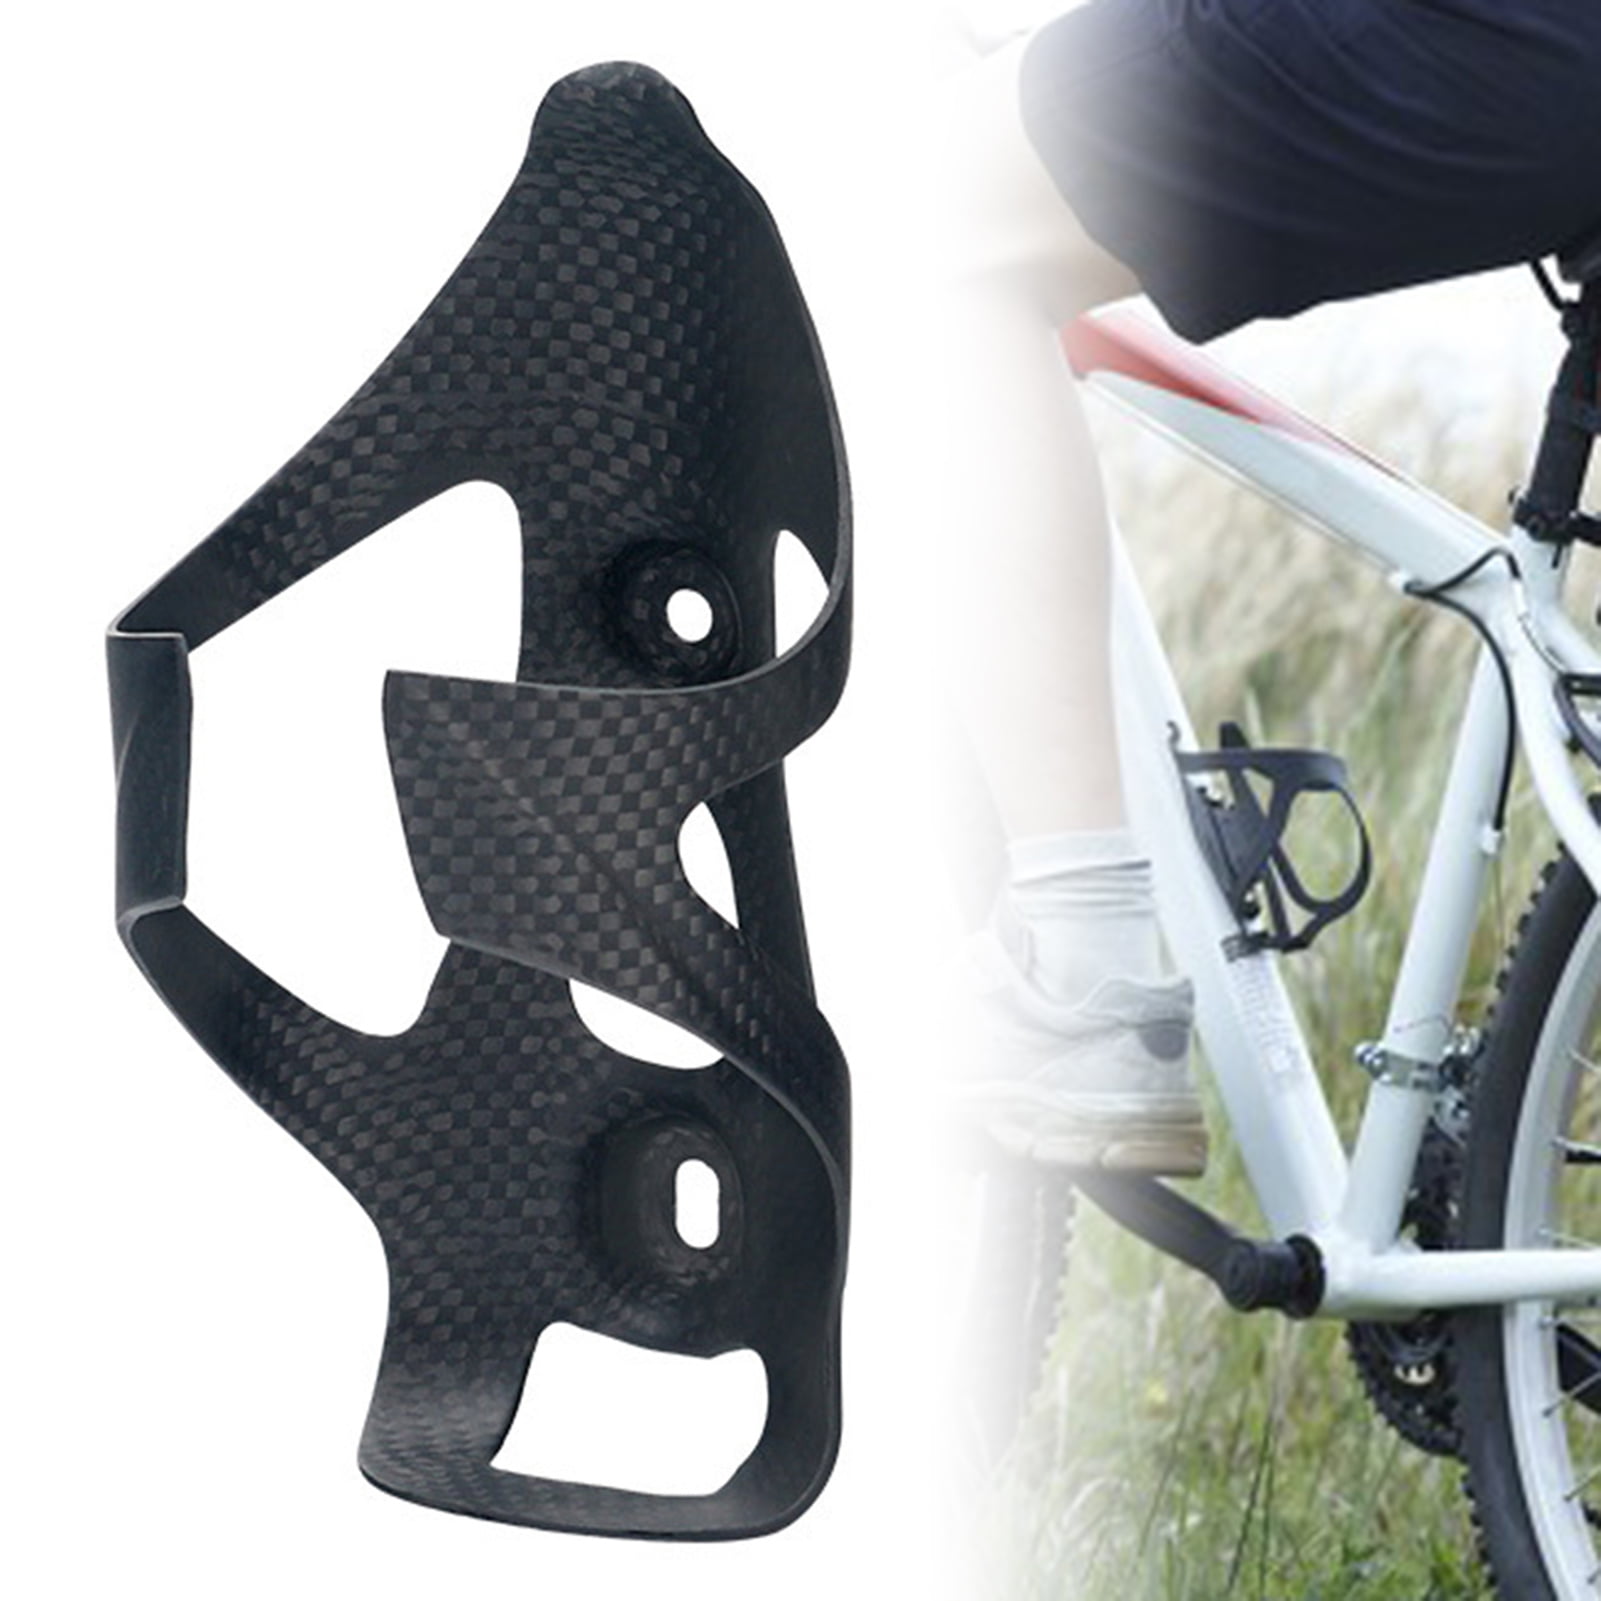 1*Water Bottle Cage MTB Road Bike Drink Cup Cages Holder Carbon Fiber Ultralight